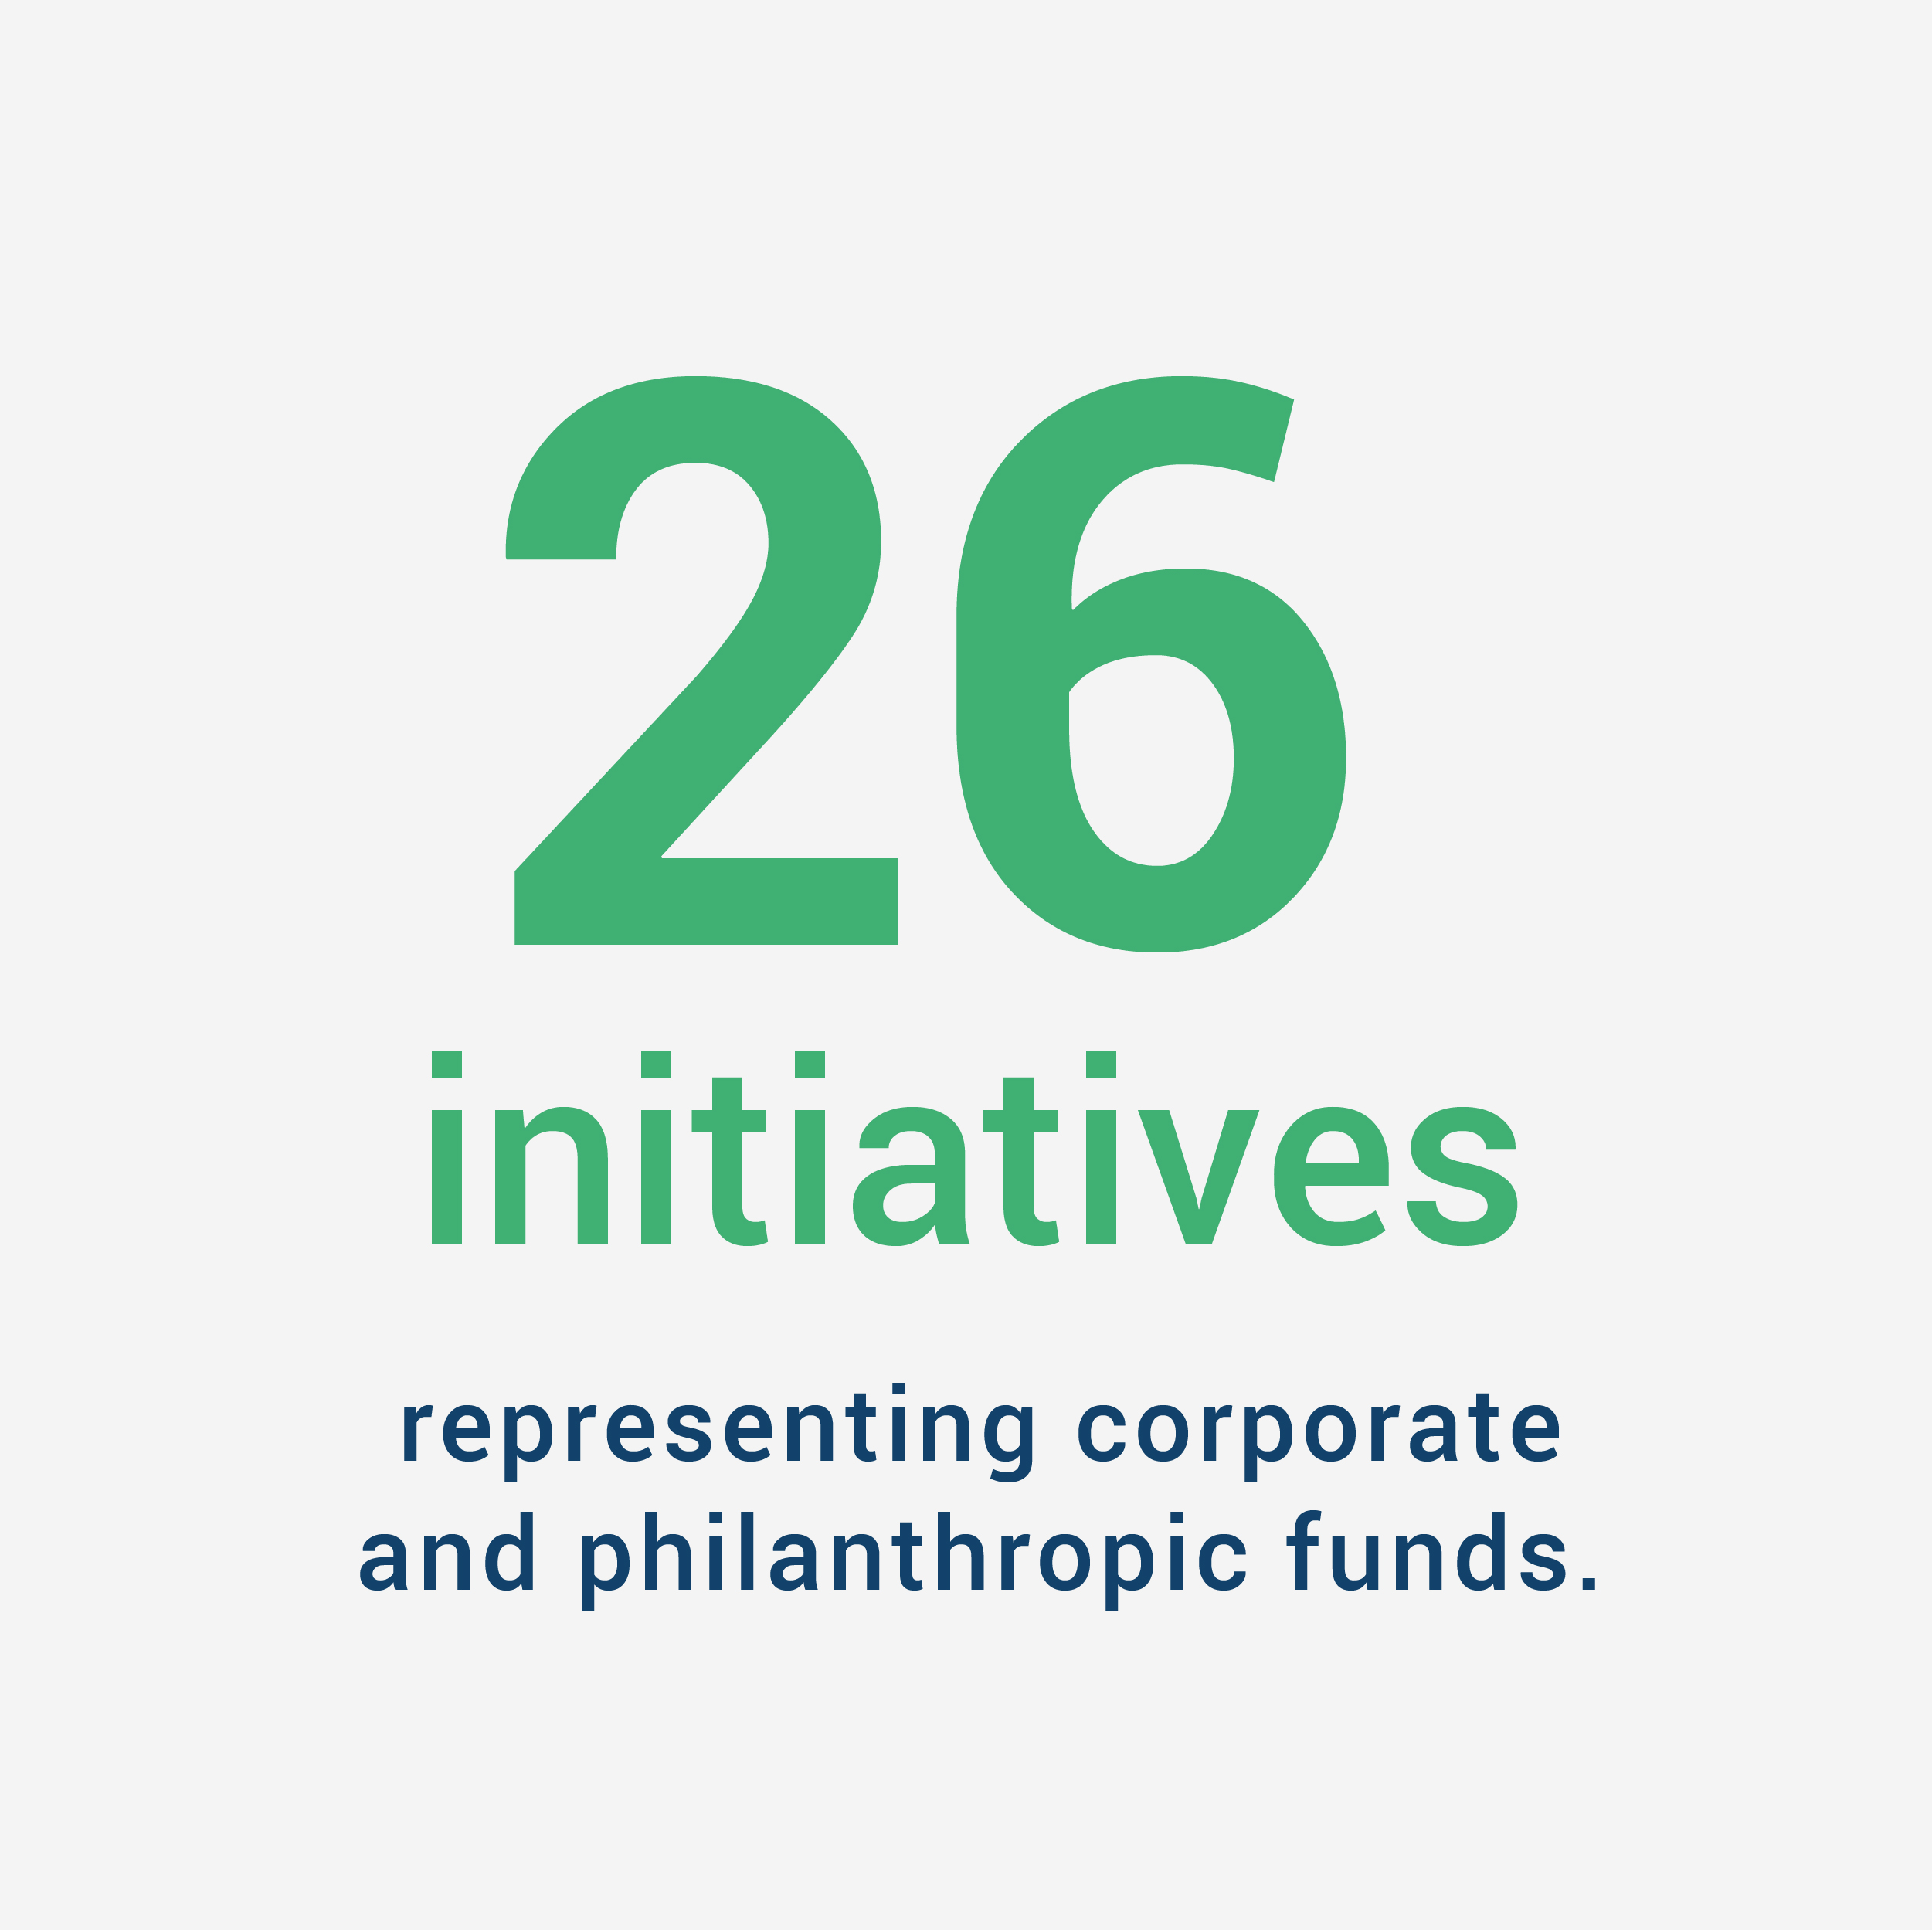 26 initiatives representing funds